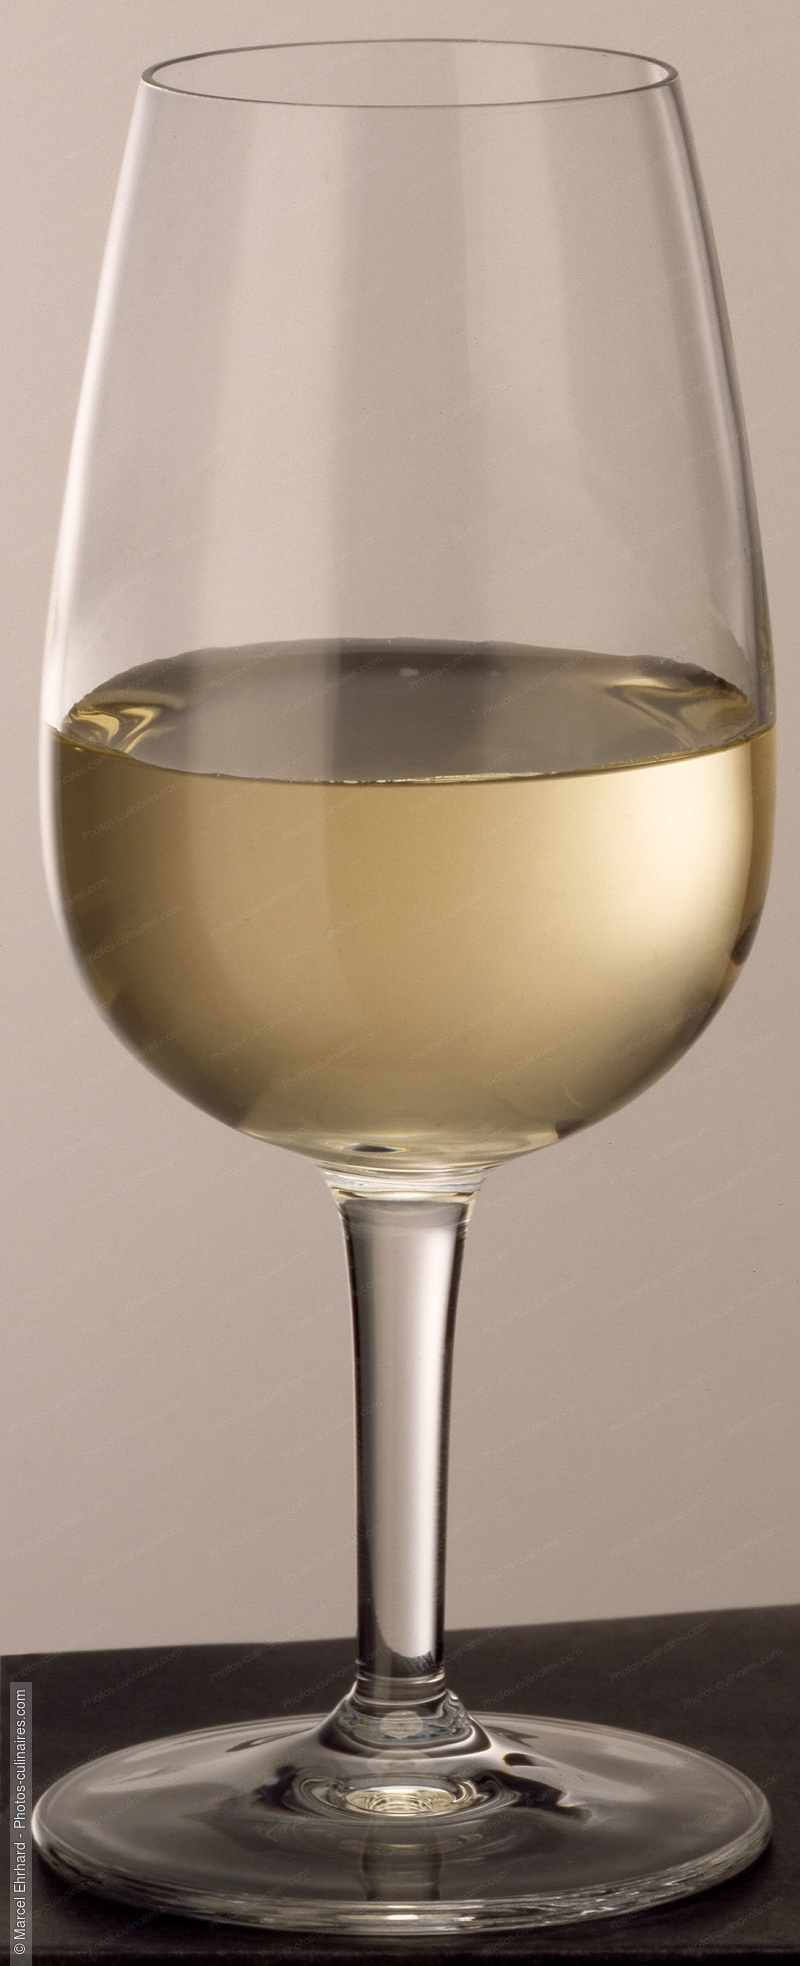 Verre INAO de vin blanc - photo référence BO33.jpg